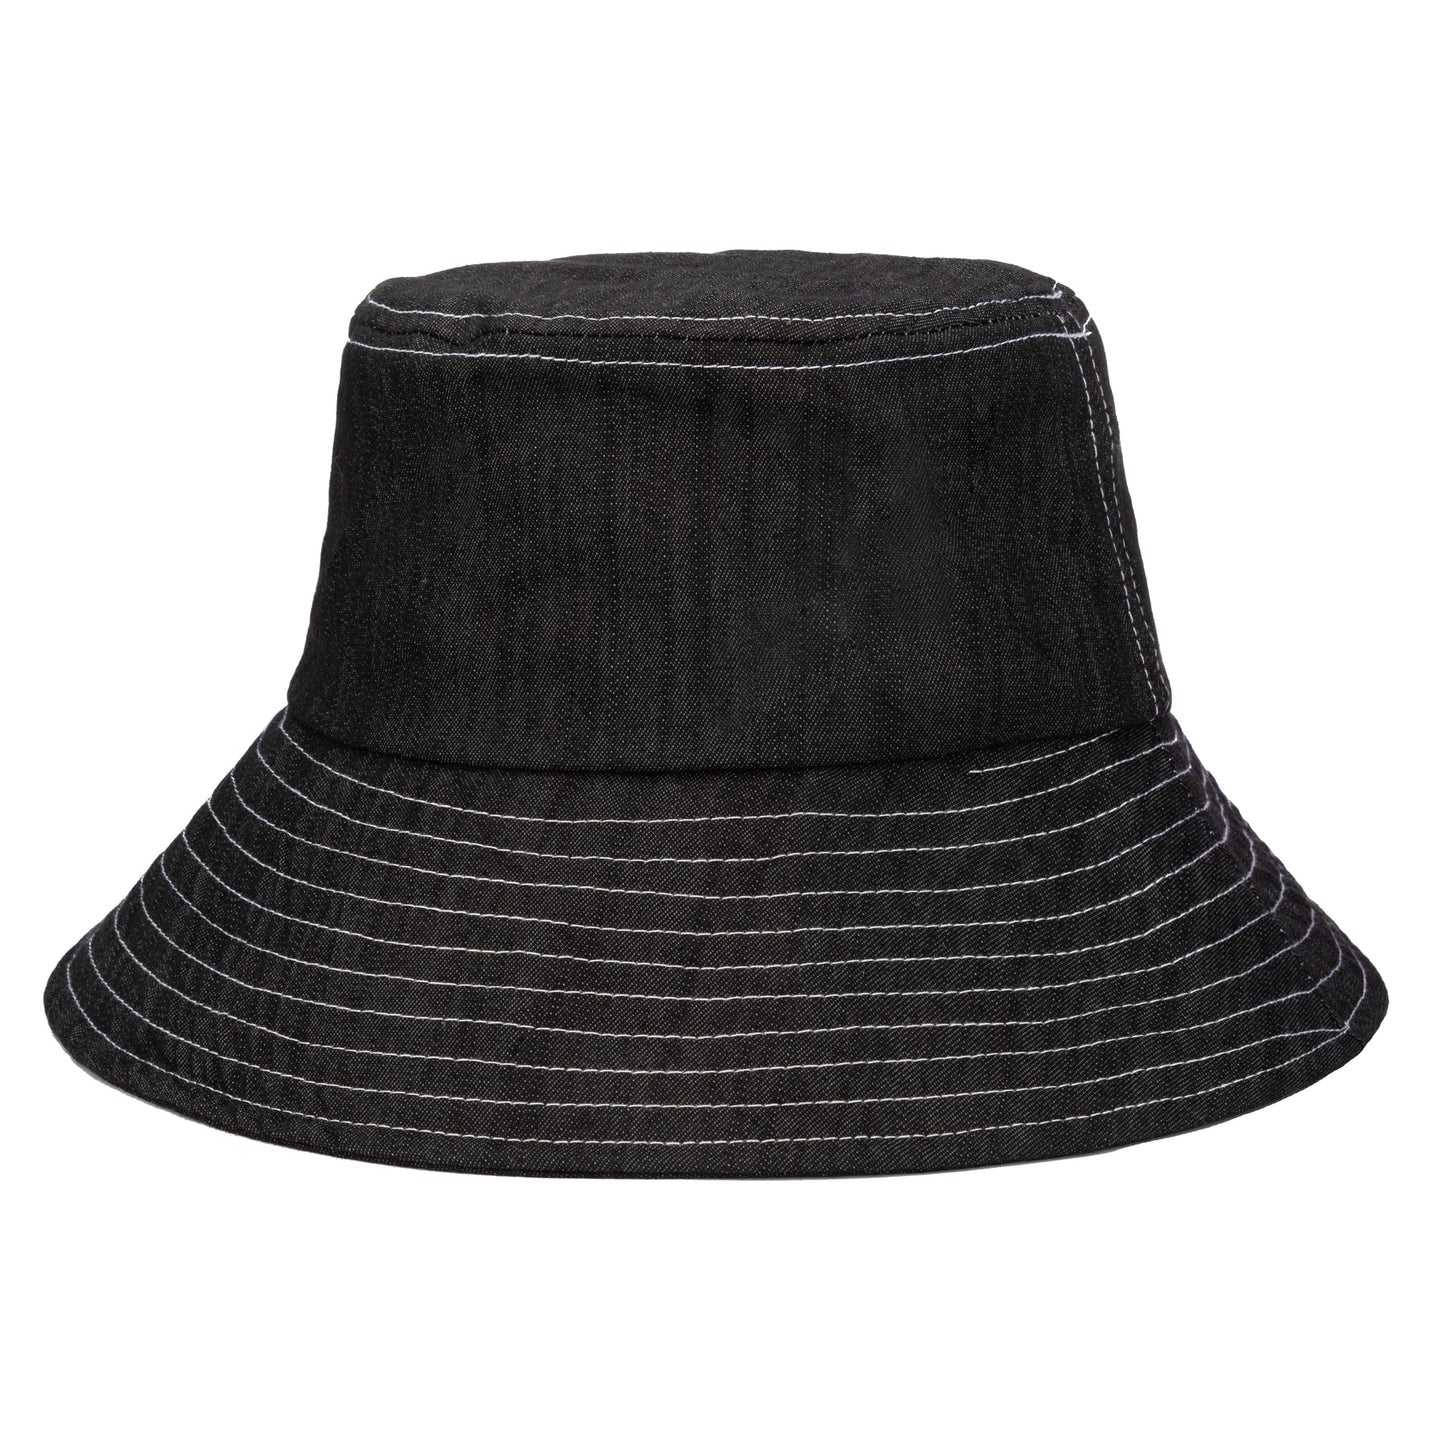 BLACK BUCKET HAT